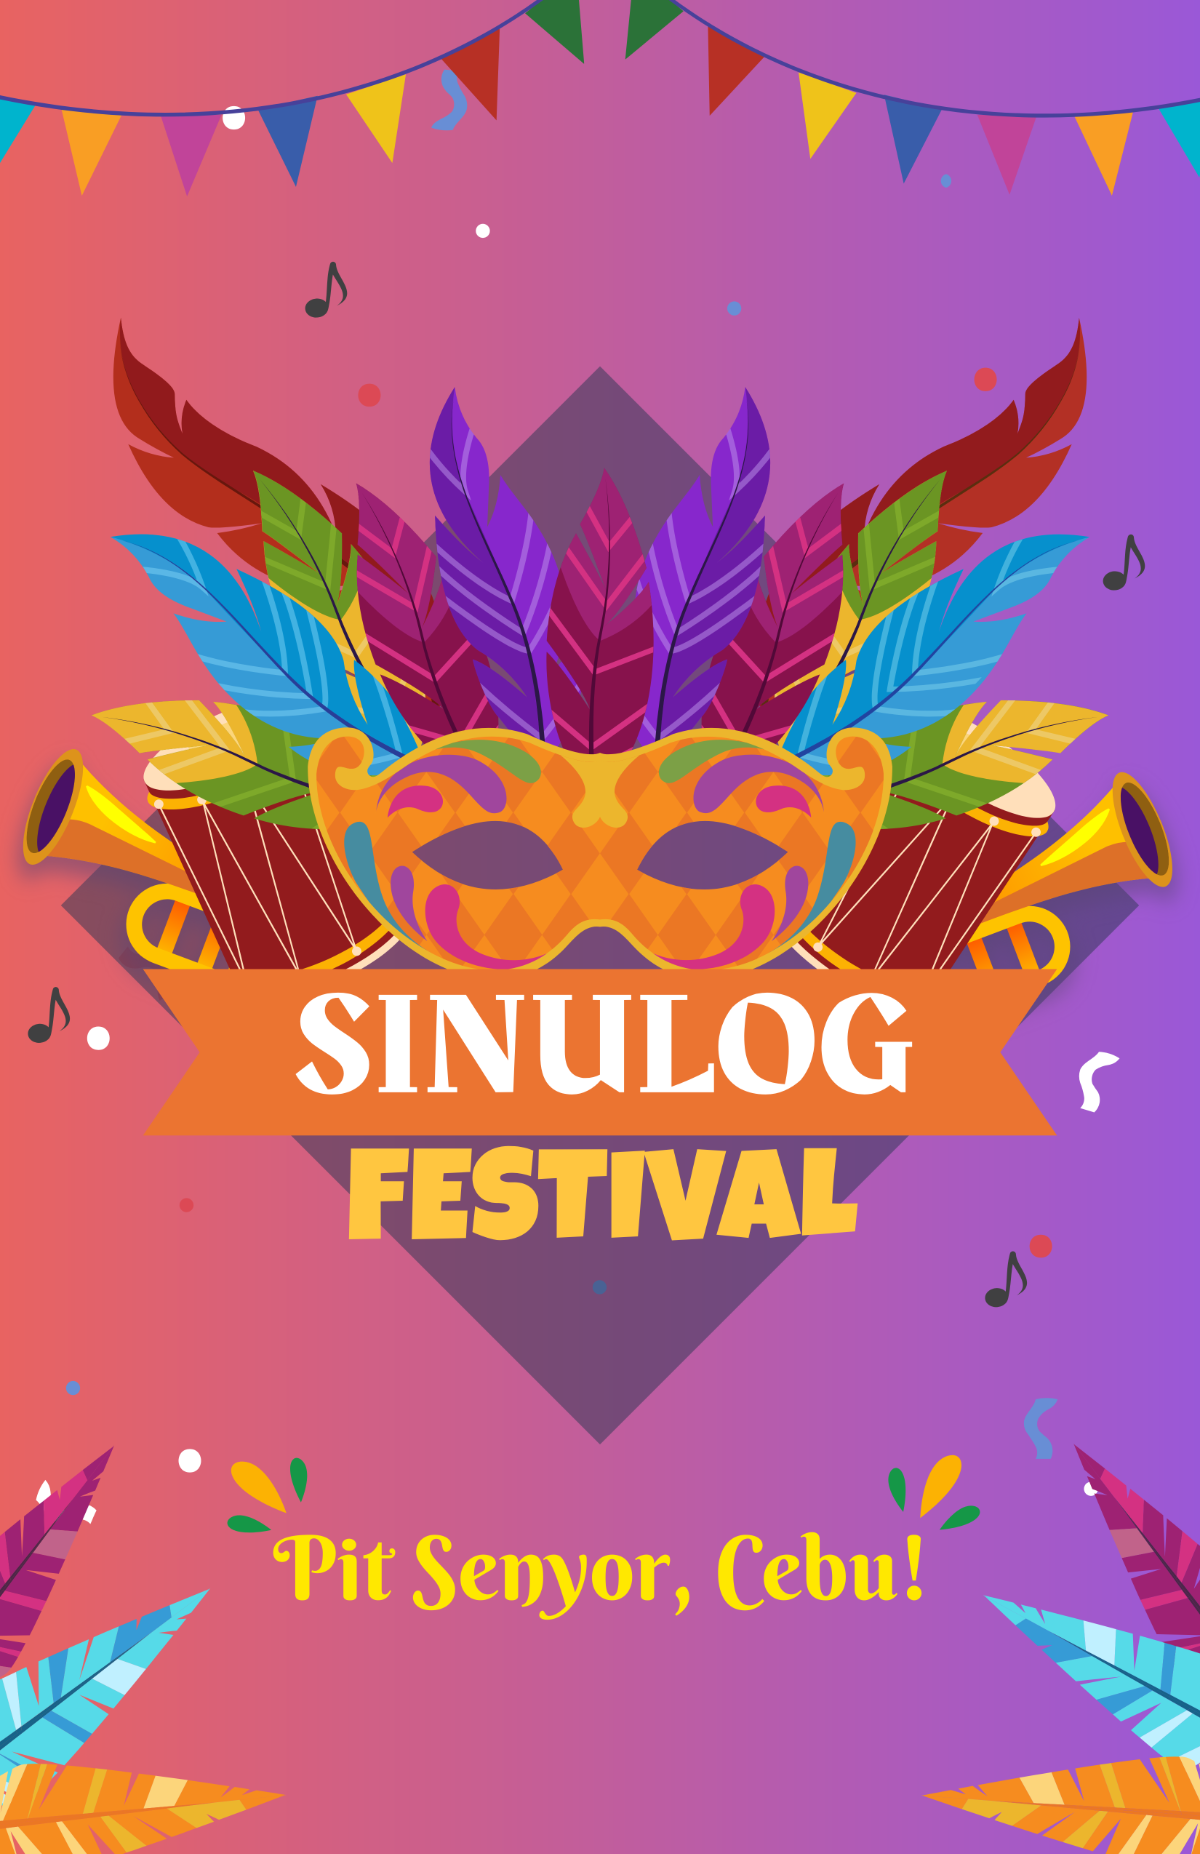 Free Cebu Sinulog Festival Poster Template